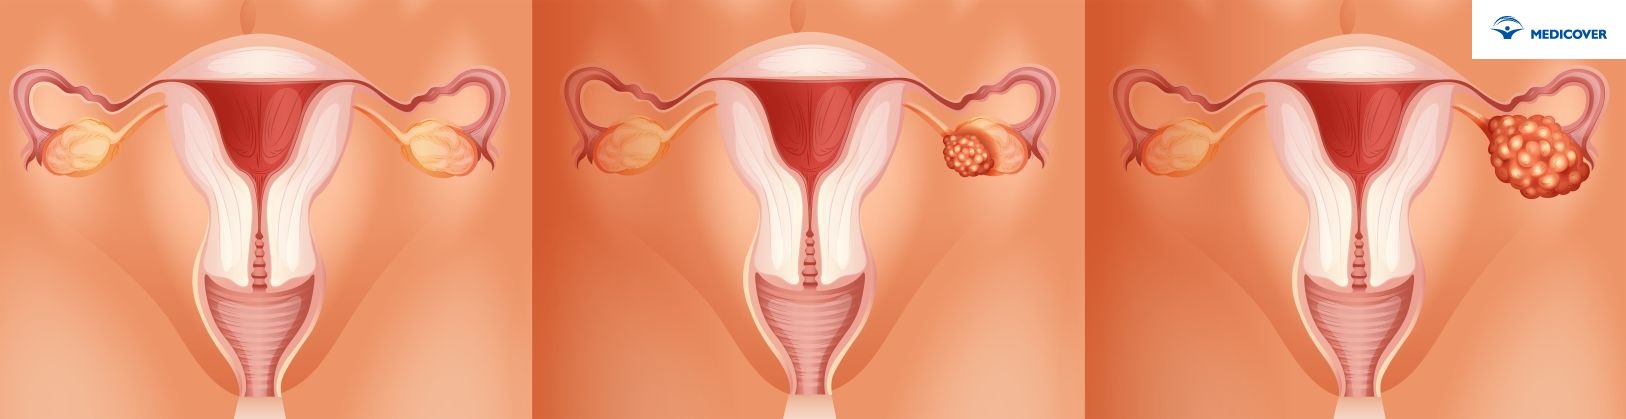 Etapy rozwoju raka jajnika